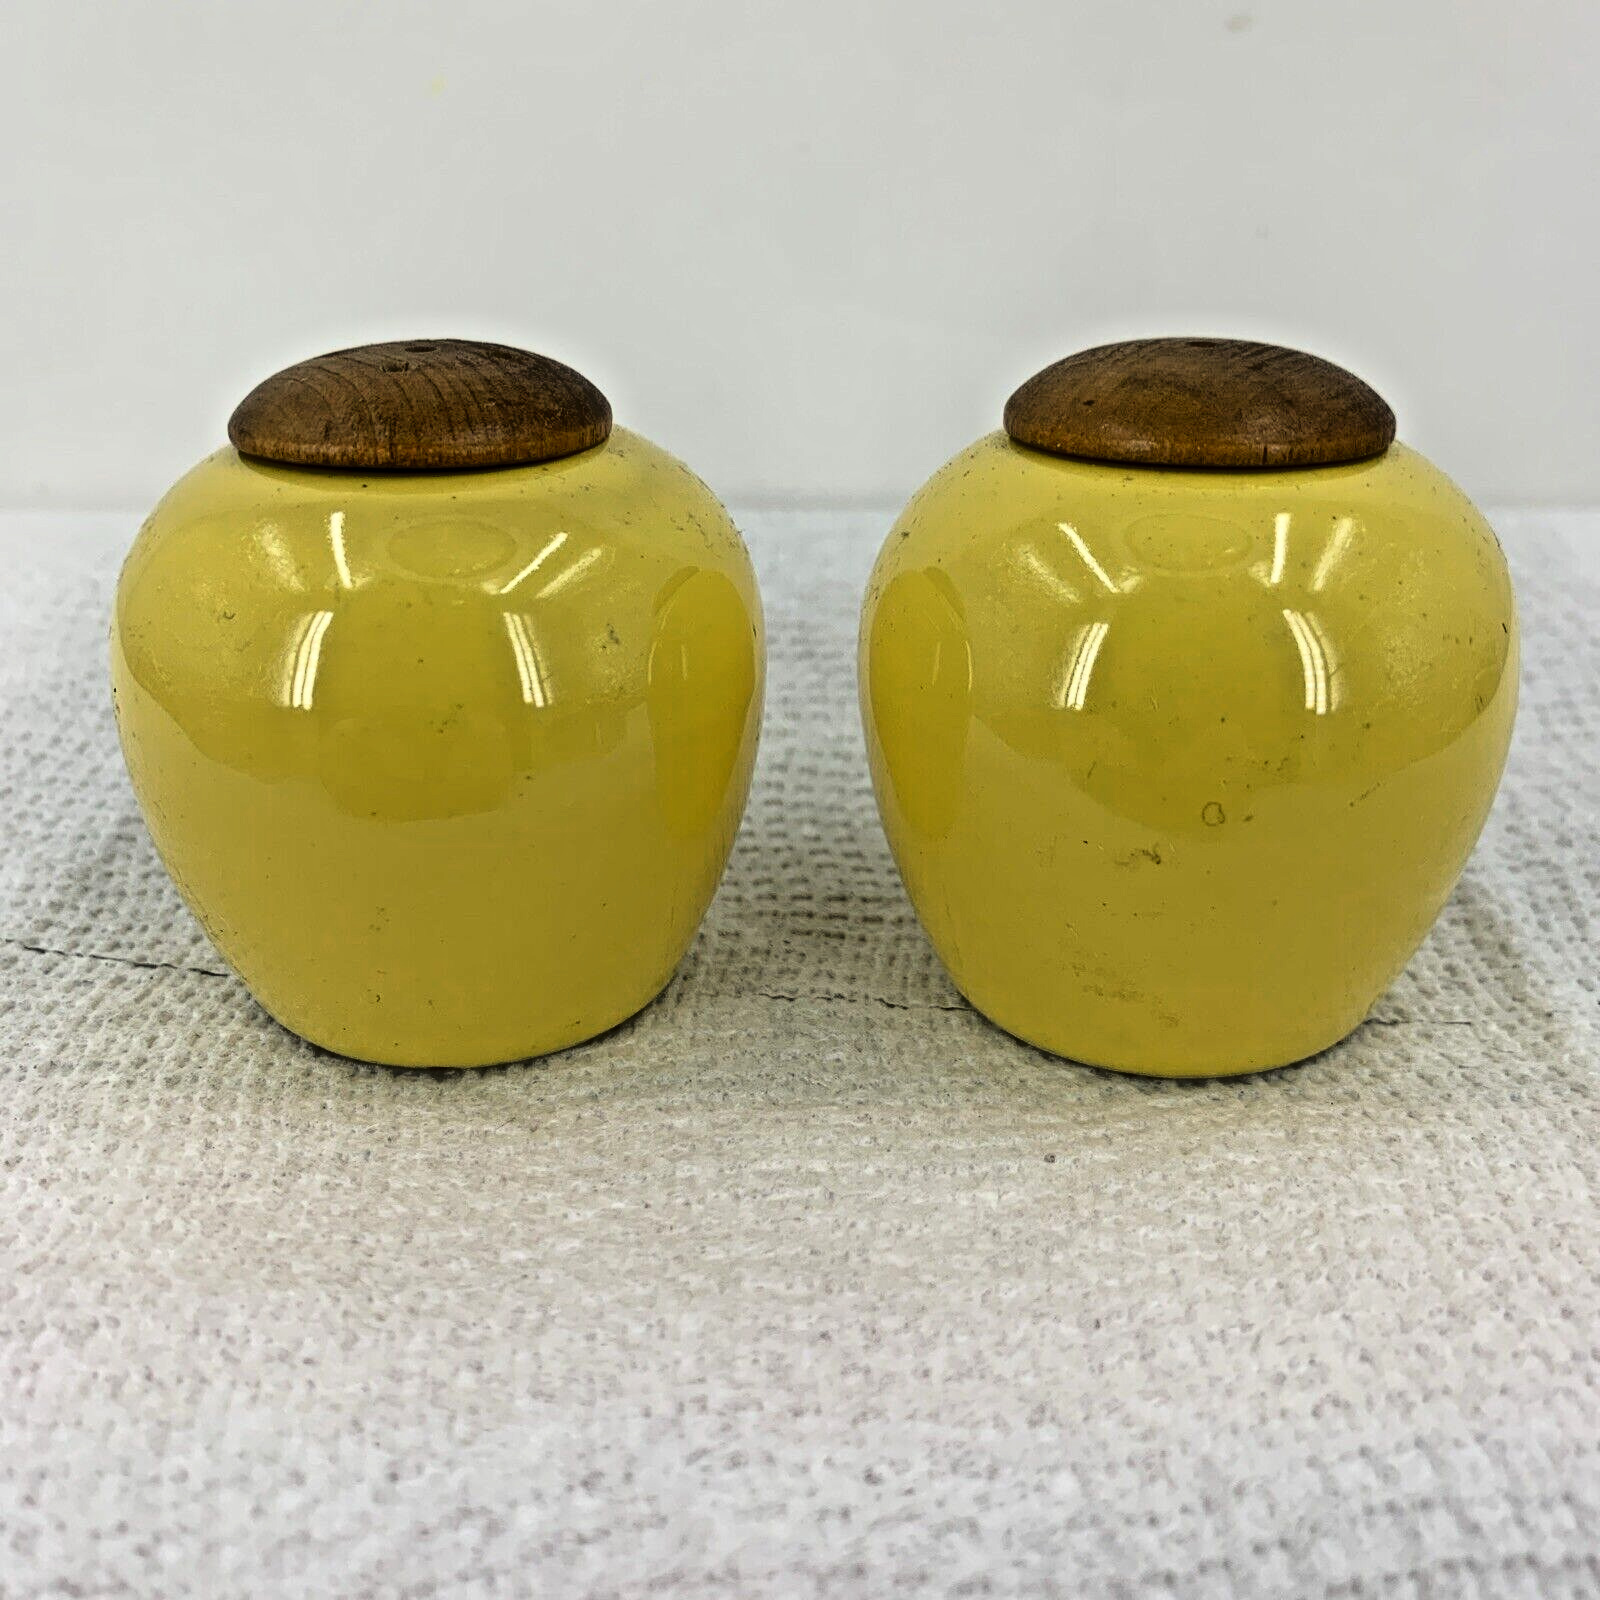 Vintage 1950s Sunshine Yellow Round Ceramic Salt & Pepper Shakers Made in Sweden